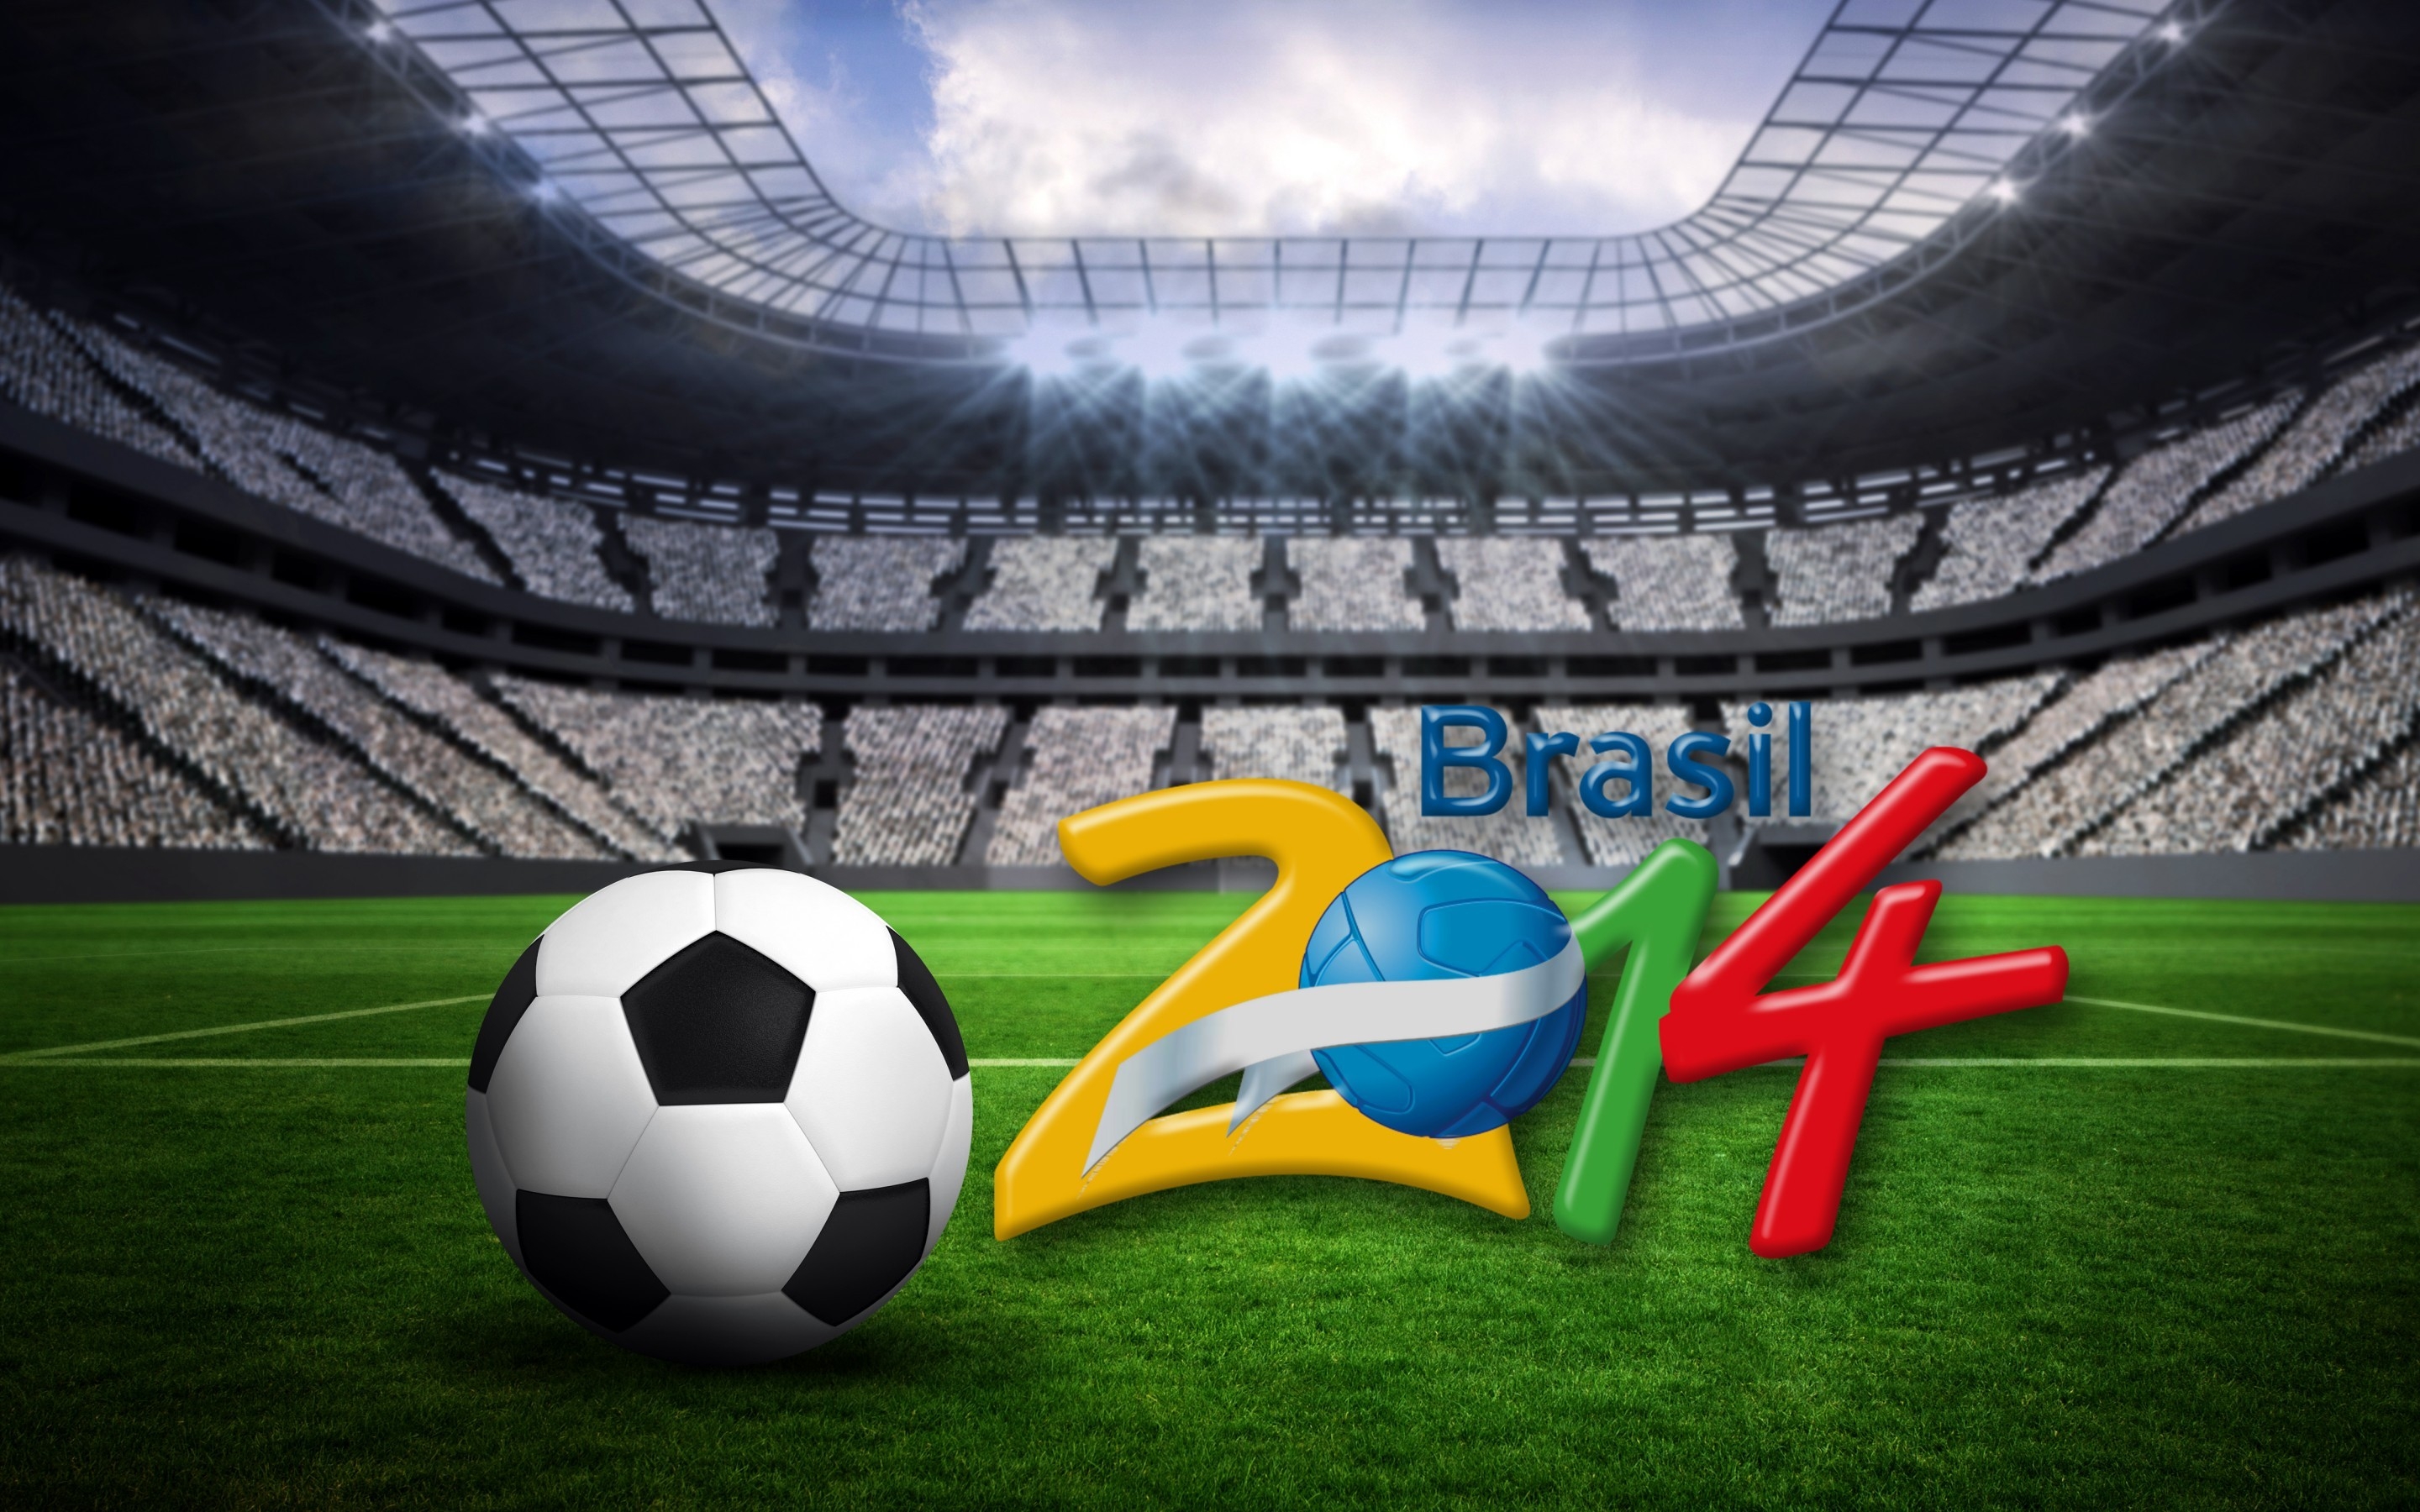 Brasil World Cup 2014 for 2880 x 1800 Retina Display resolution